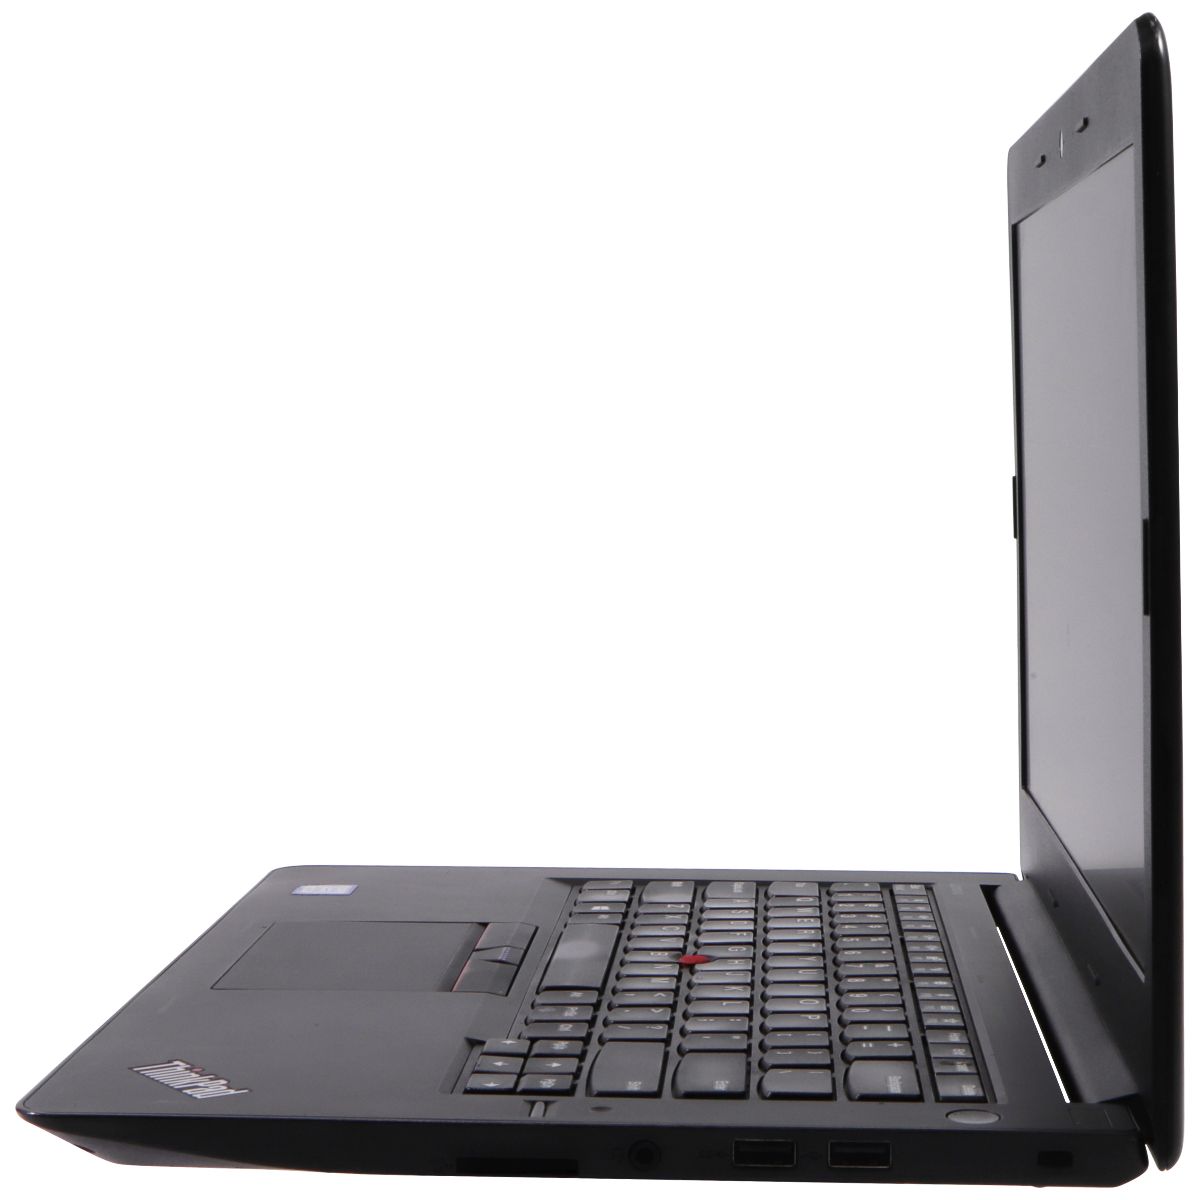 Lenovo ThinkPad E470 (14-in) Laptop (20H1-0069US) i5-6200U/500GB HDD/8GB/10 PRO Laptops - PC Laptops & Netbooks Lenovo    - Simple Cell Bulk Wholesale Pricing - USA Seller